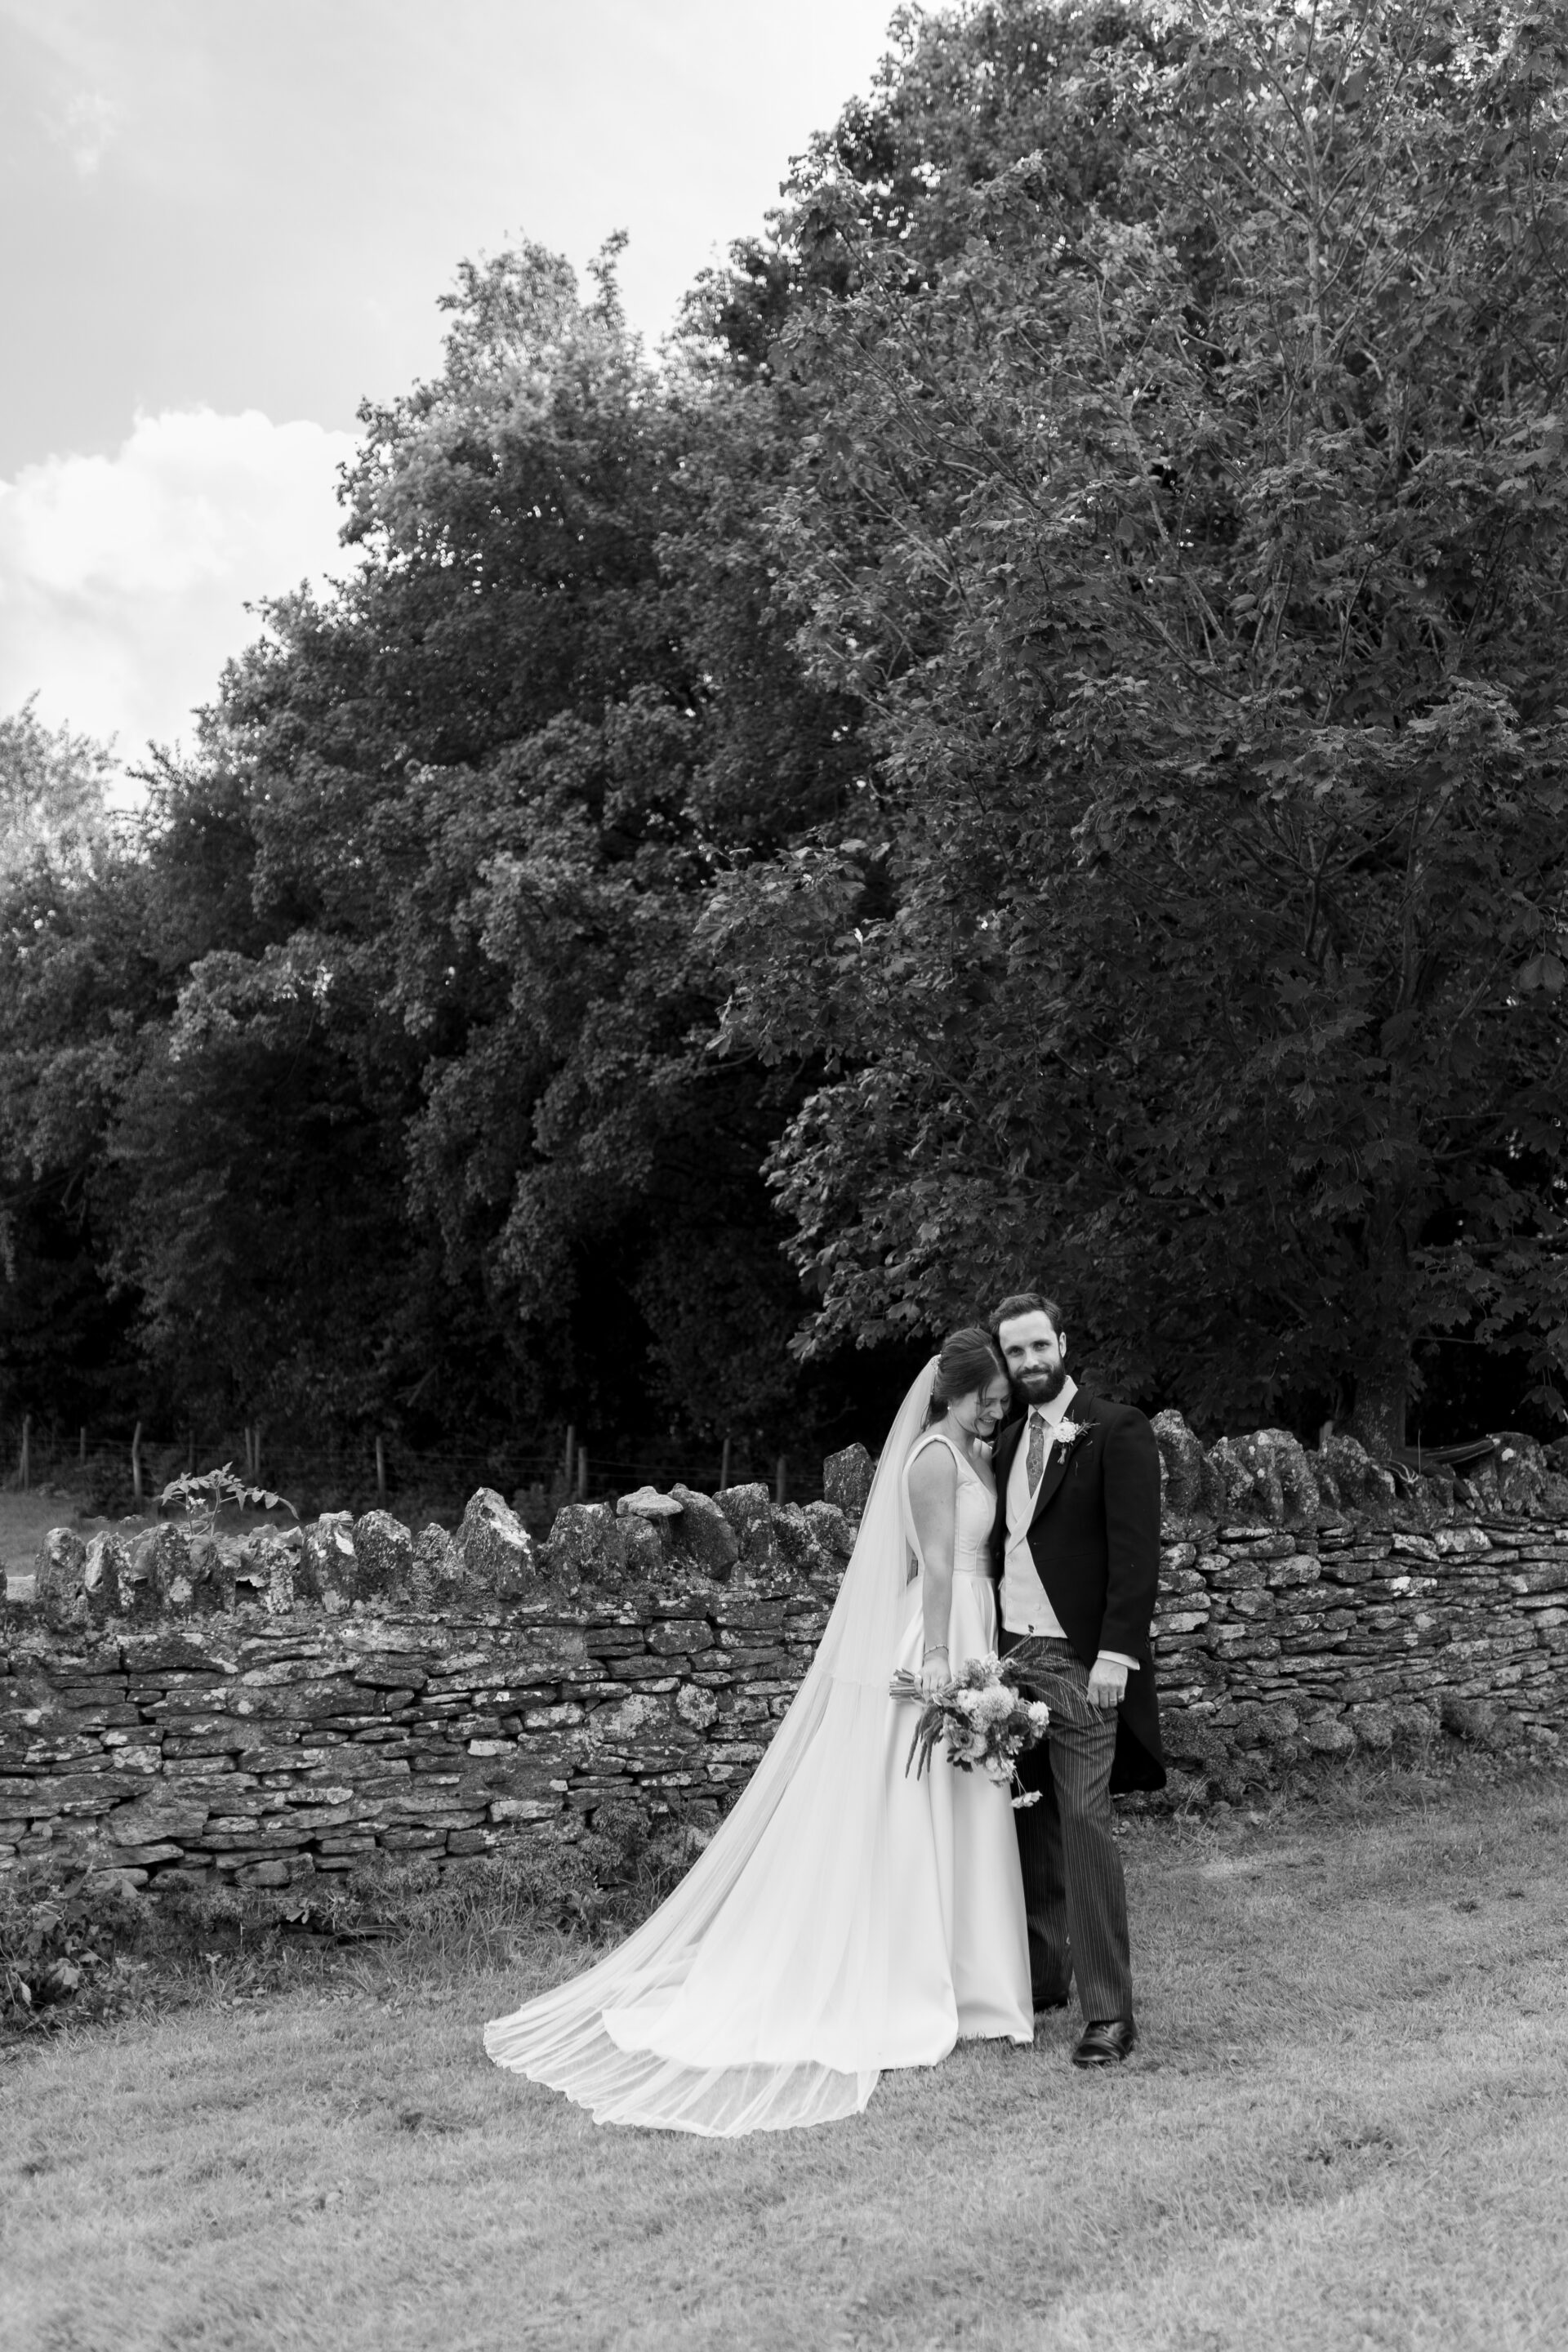 Editorial wedding photography at Somerset wedding